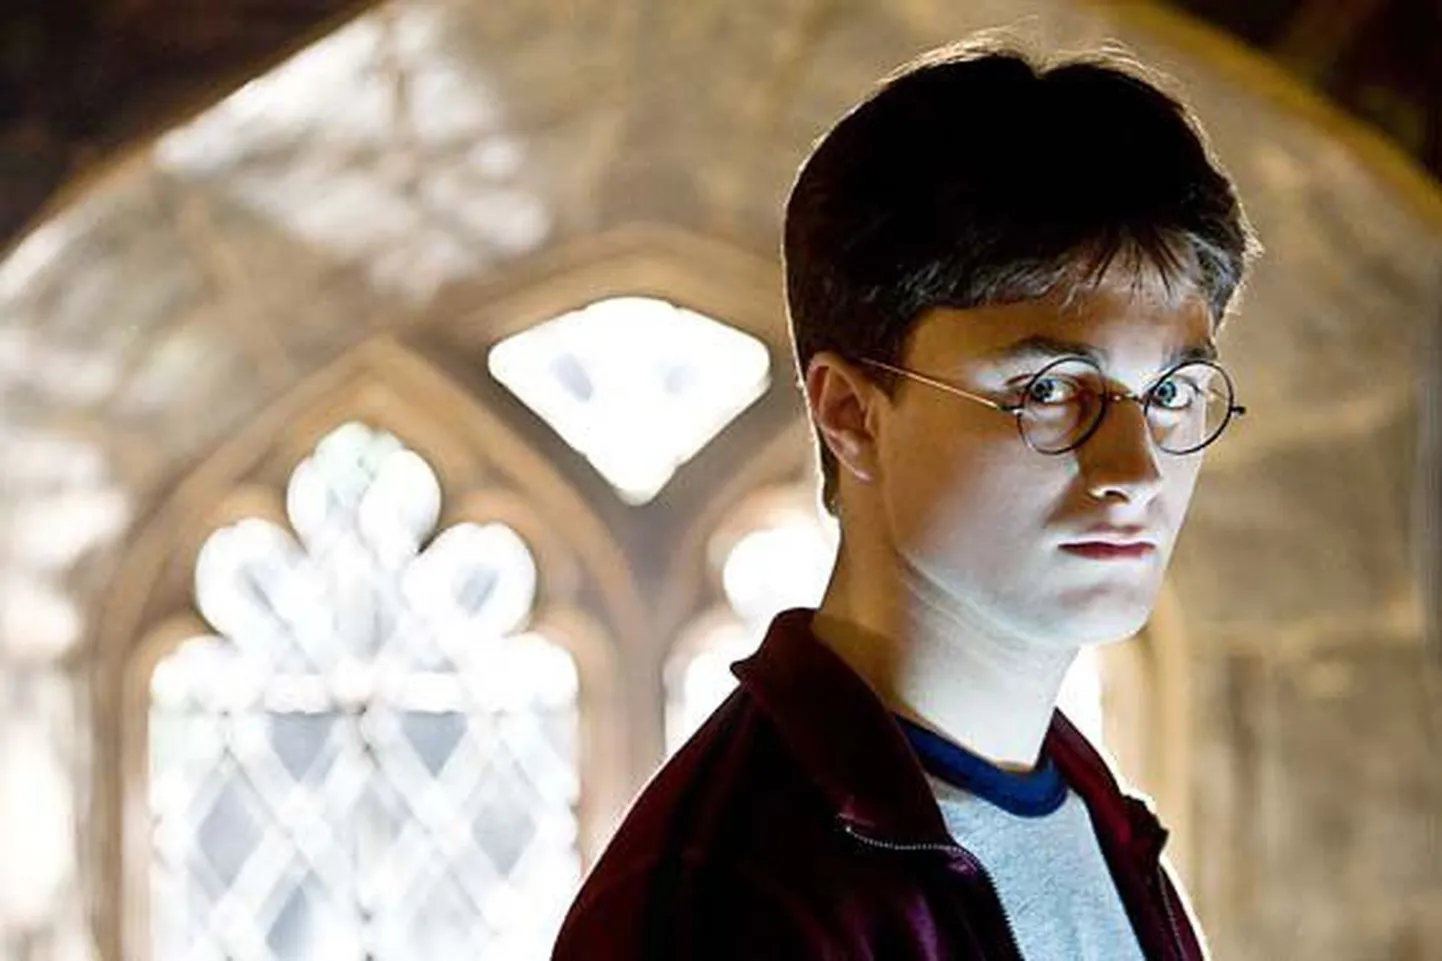 "Harry Potter ja segavereline prints".